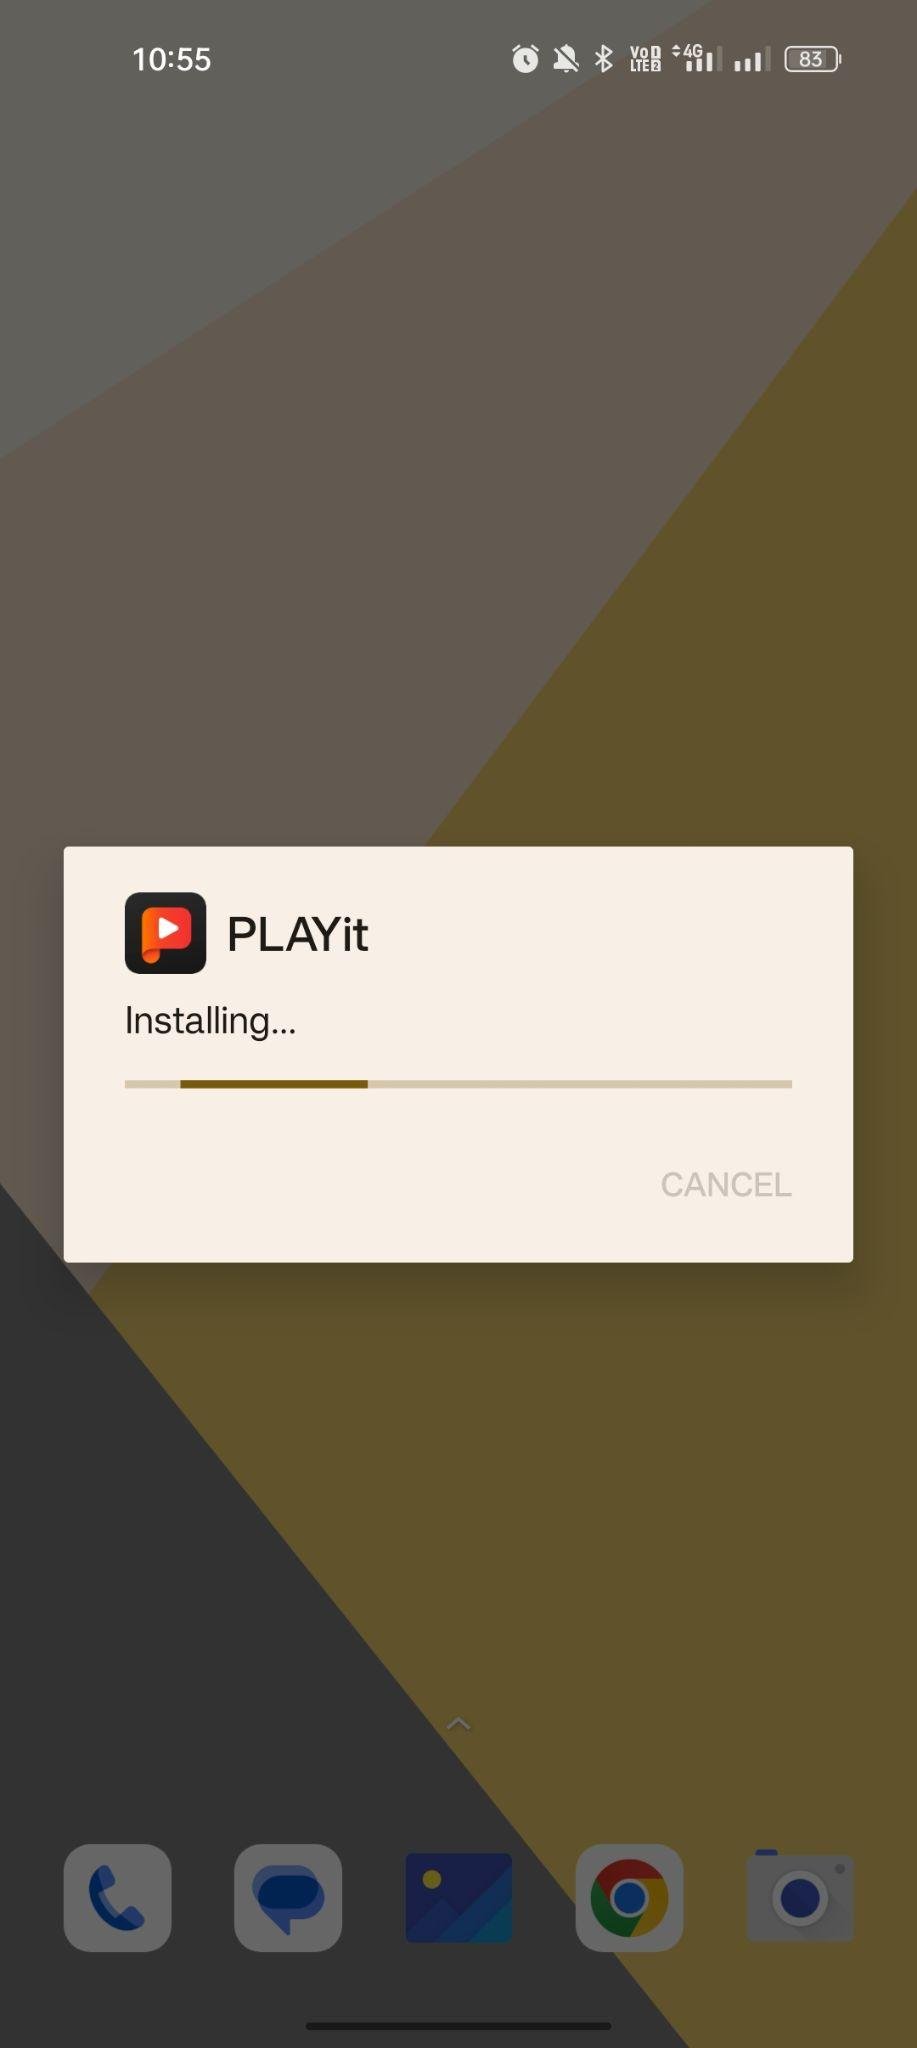 PLAYit apk installing